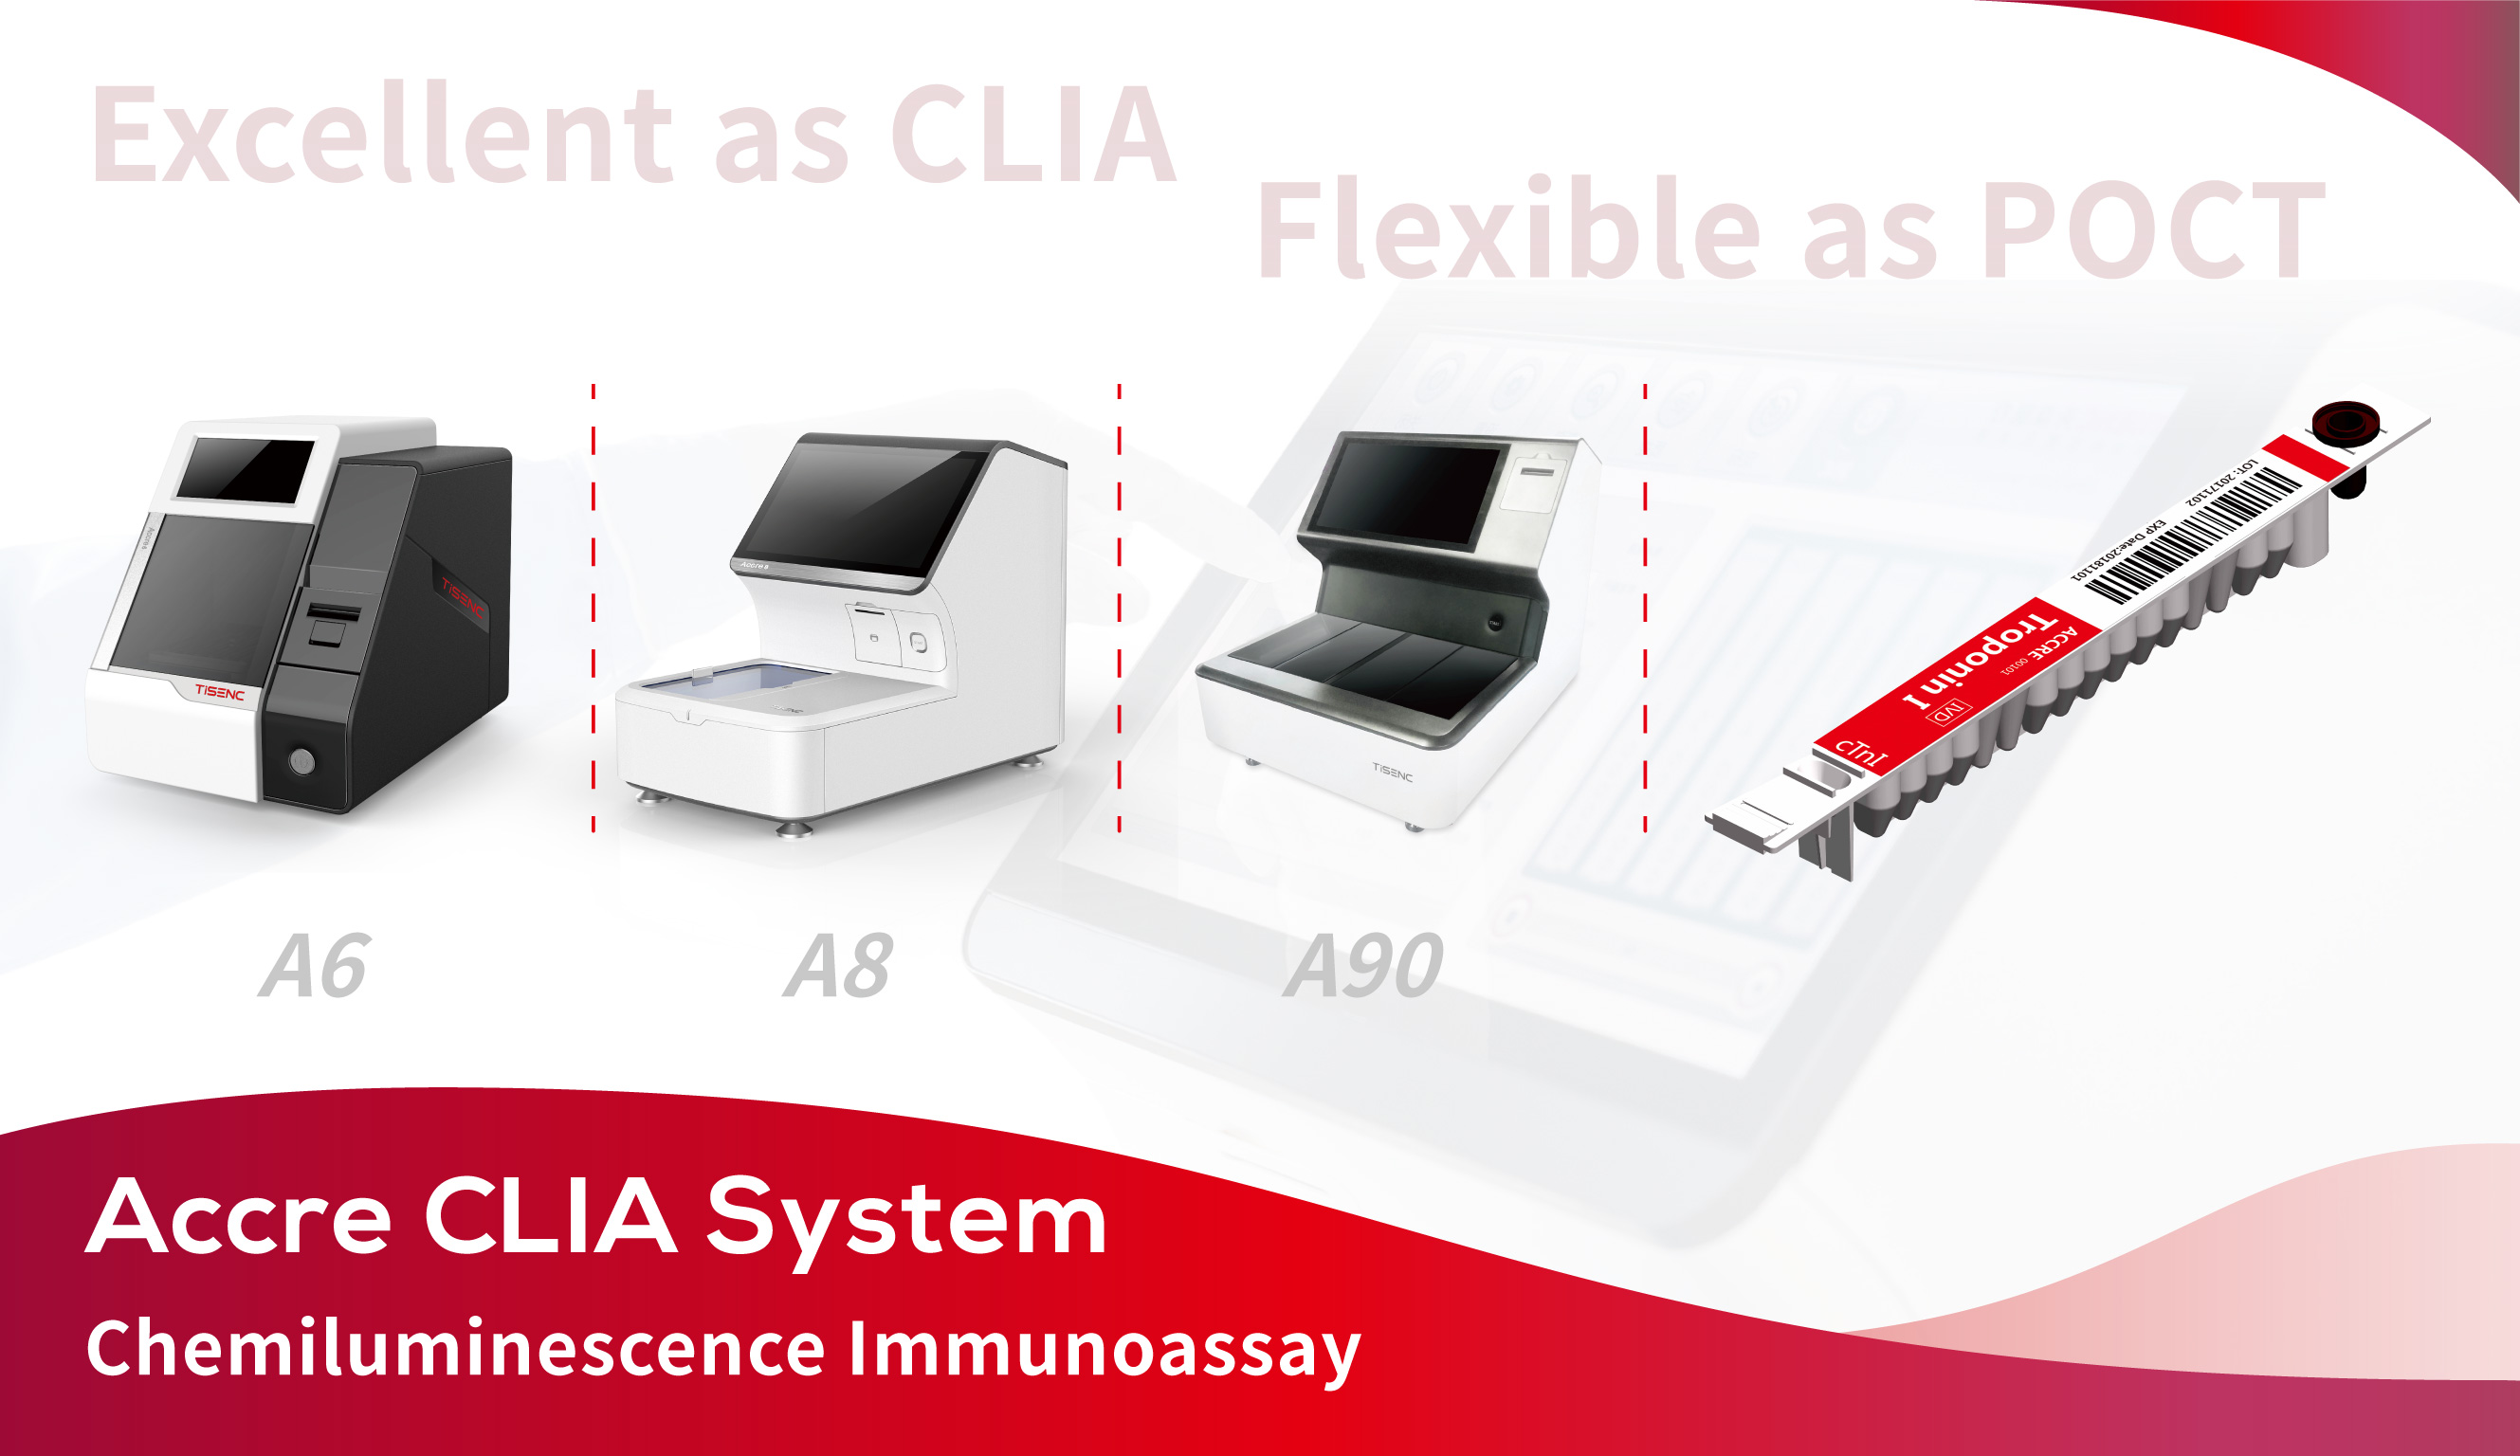 Accre CLIA System—Wondfo Chemiluminescence Immunoassay Analyzers